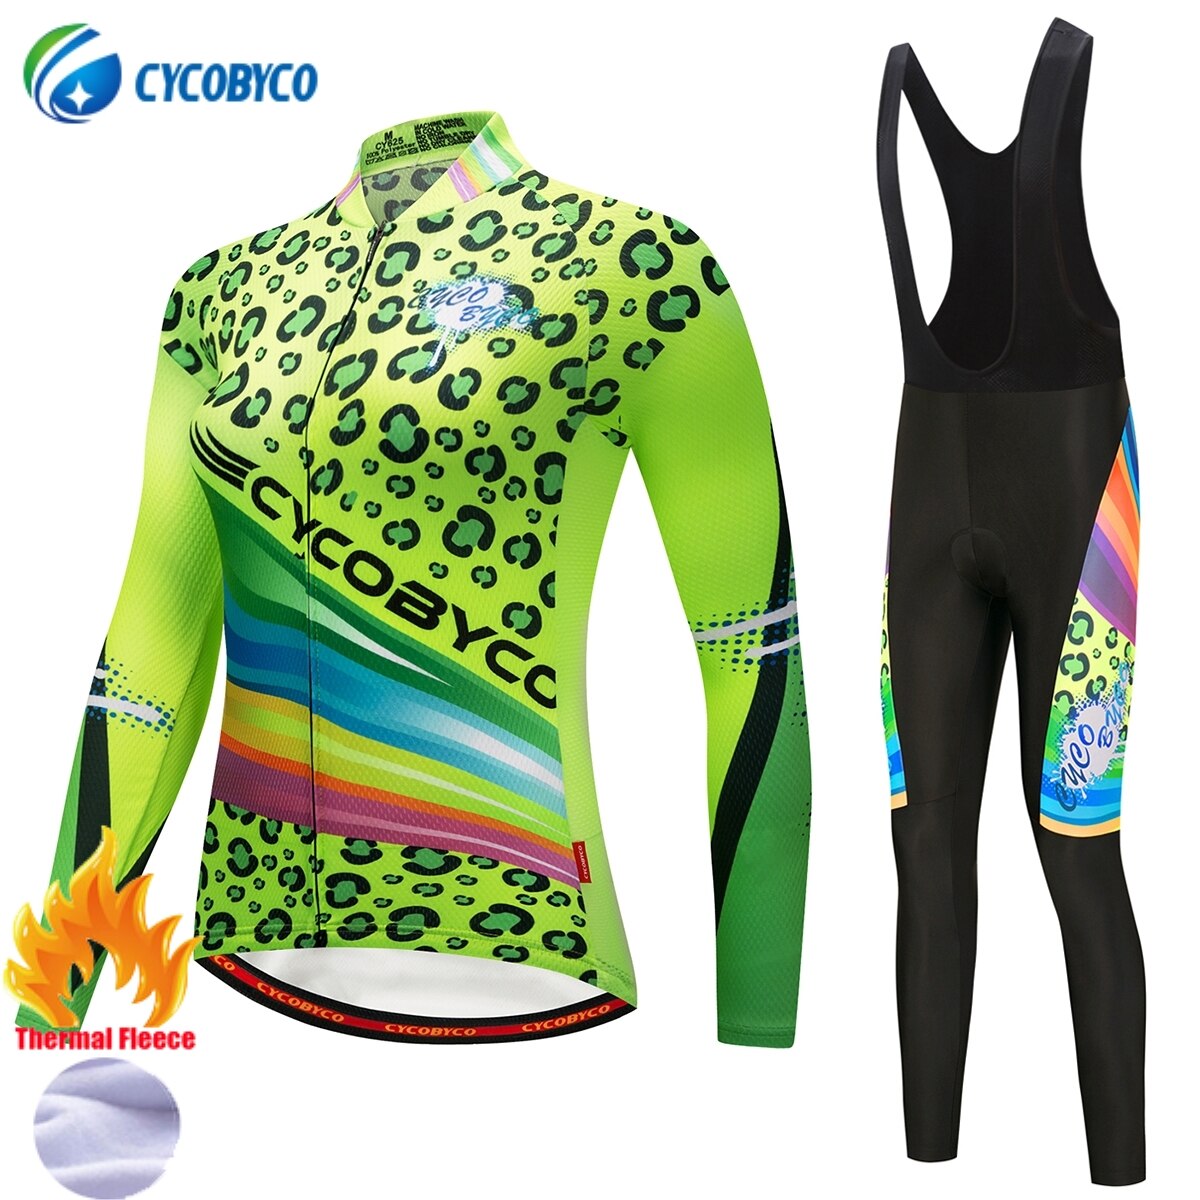 Cycobyco Winter Thermal Fleece Women Cycling Jerseys – CYCOBYCO